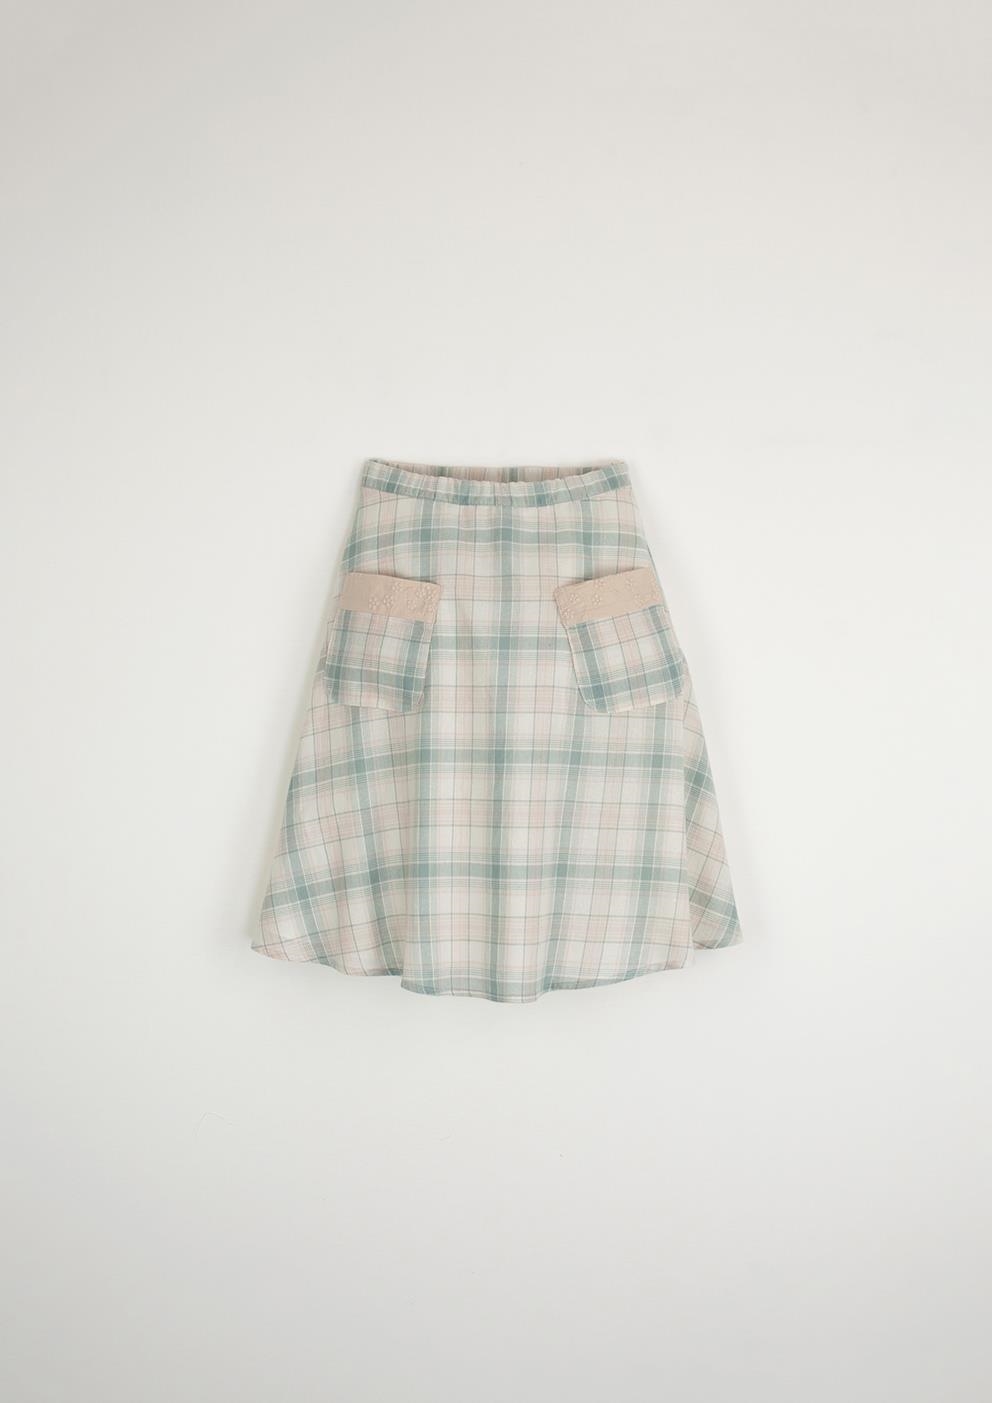 Mod.19.4 Pink plaid skirt with pockets | SS23 Mod.19.4 Pink plaid skirt with pockets